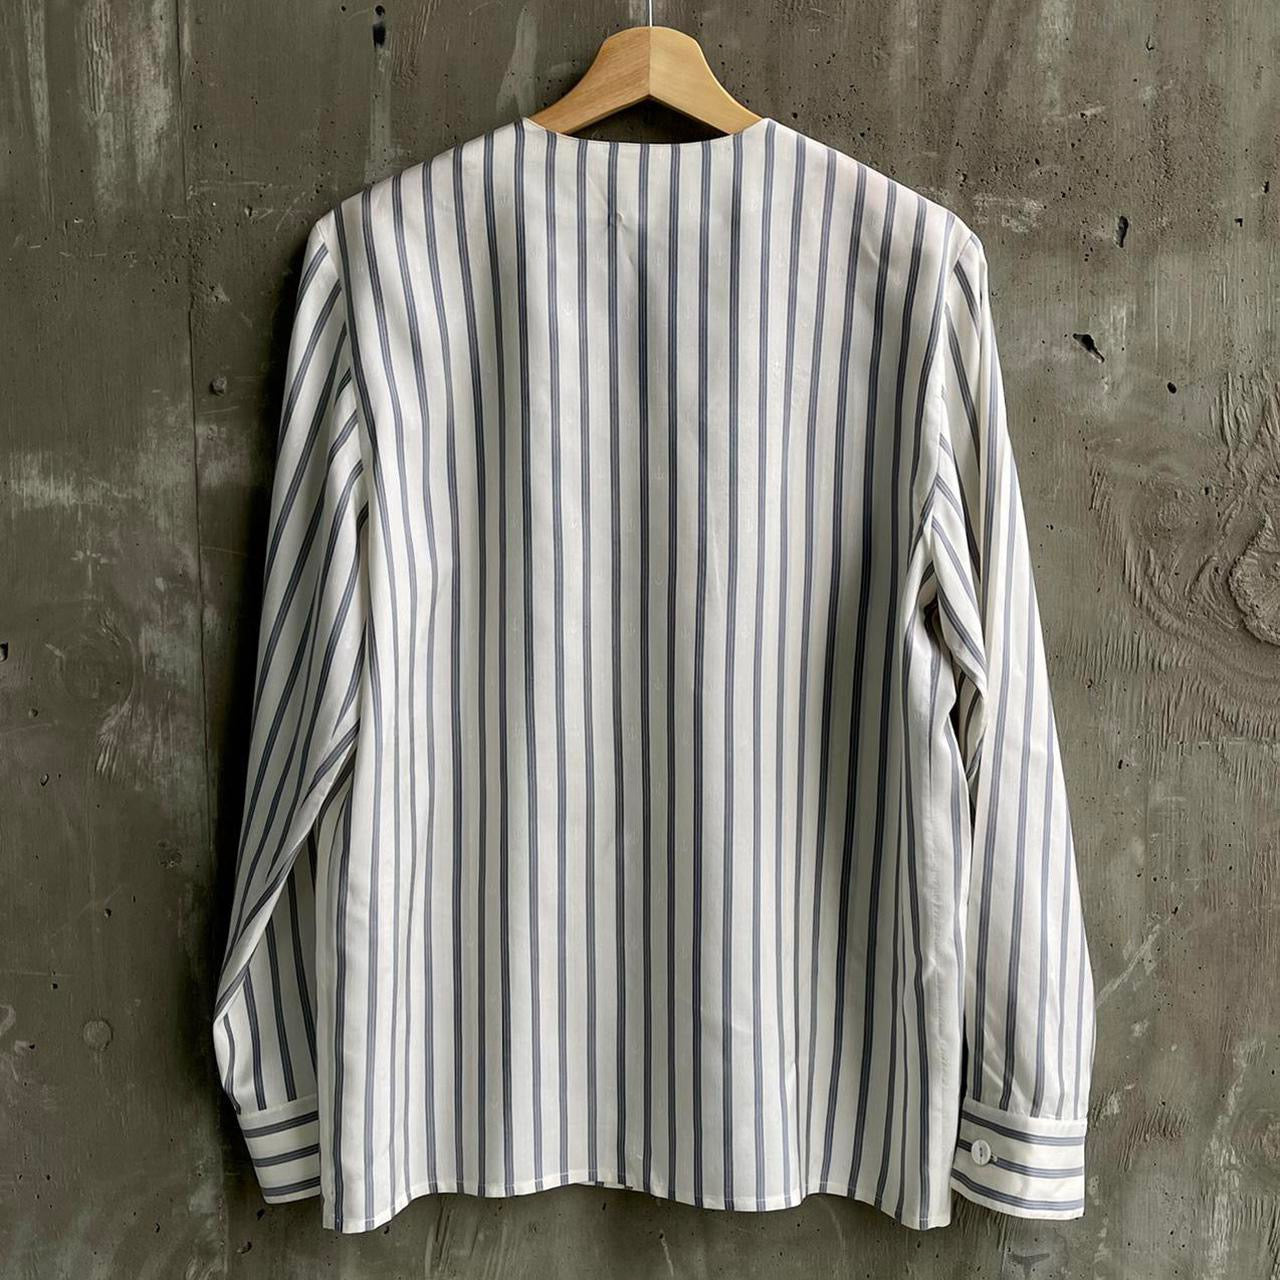 Gucci vintage striped silk blouse